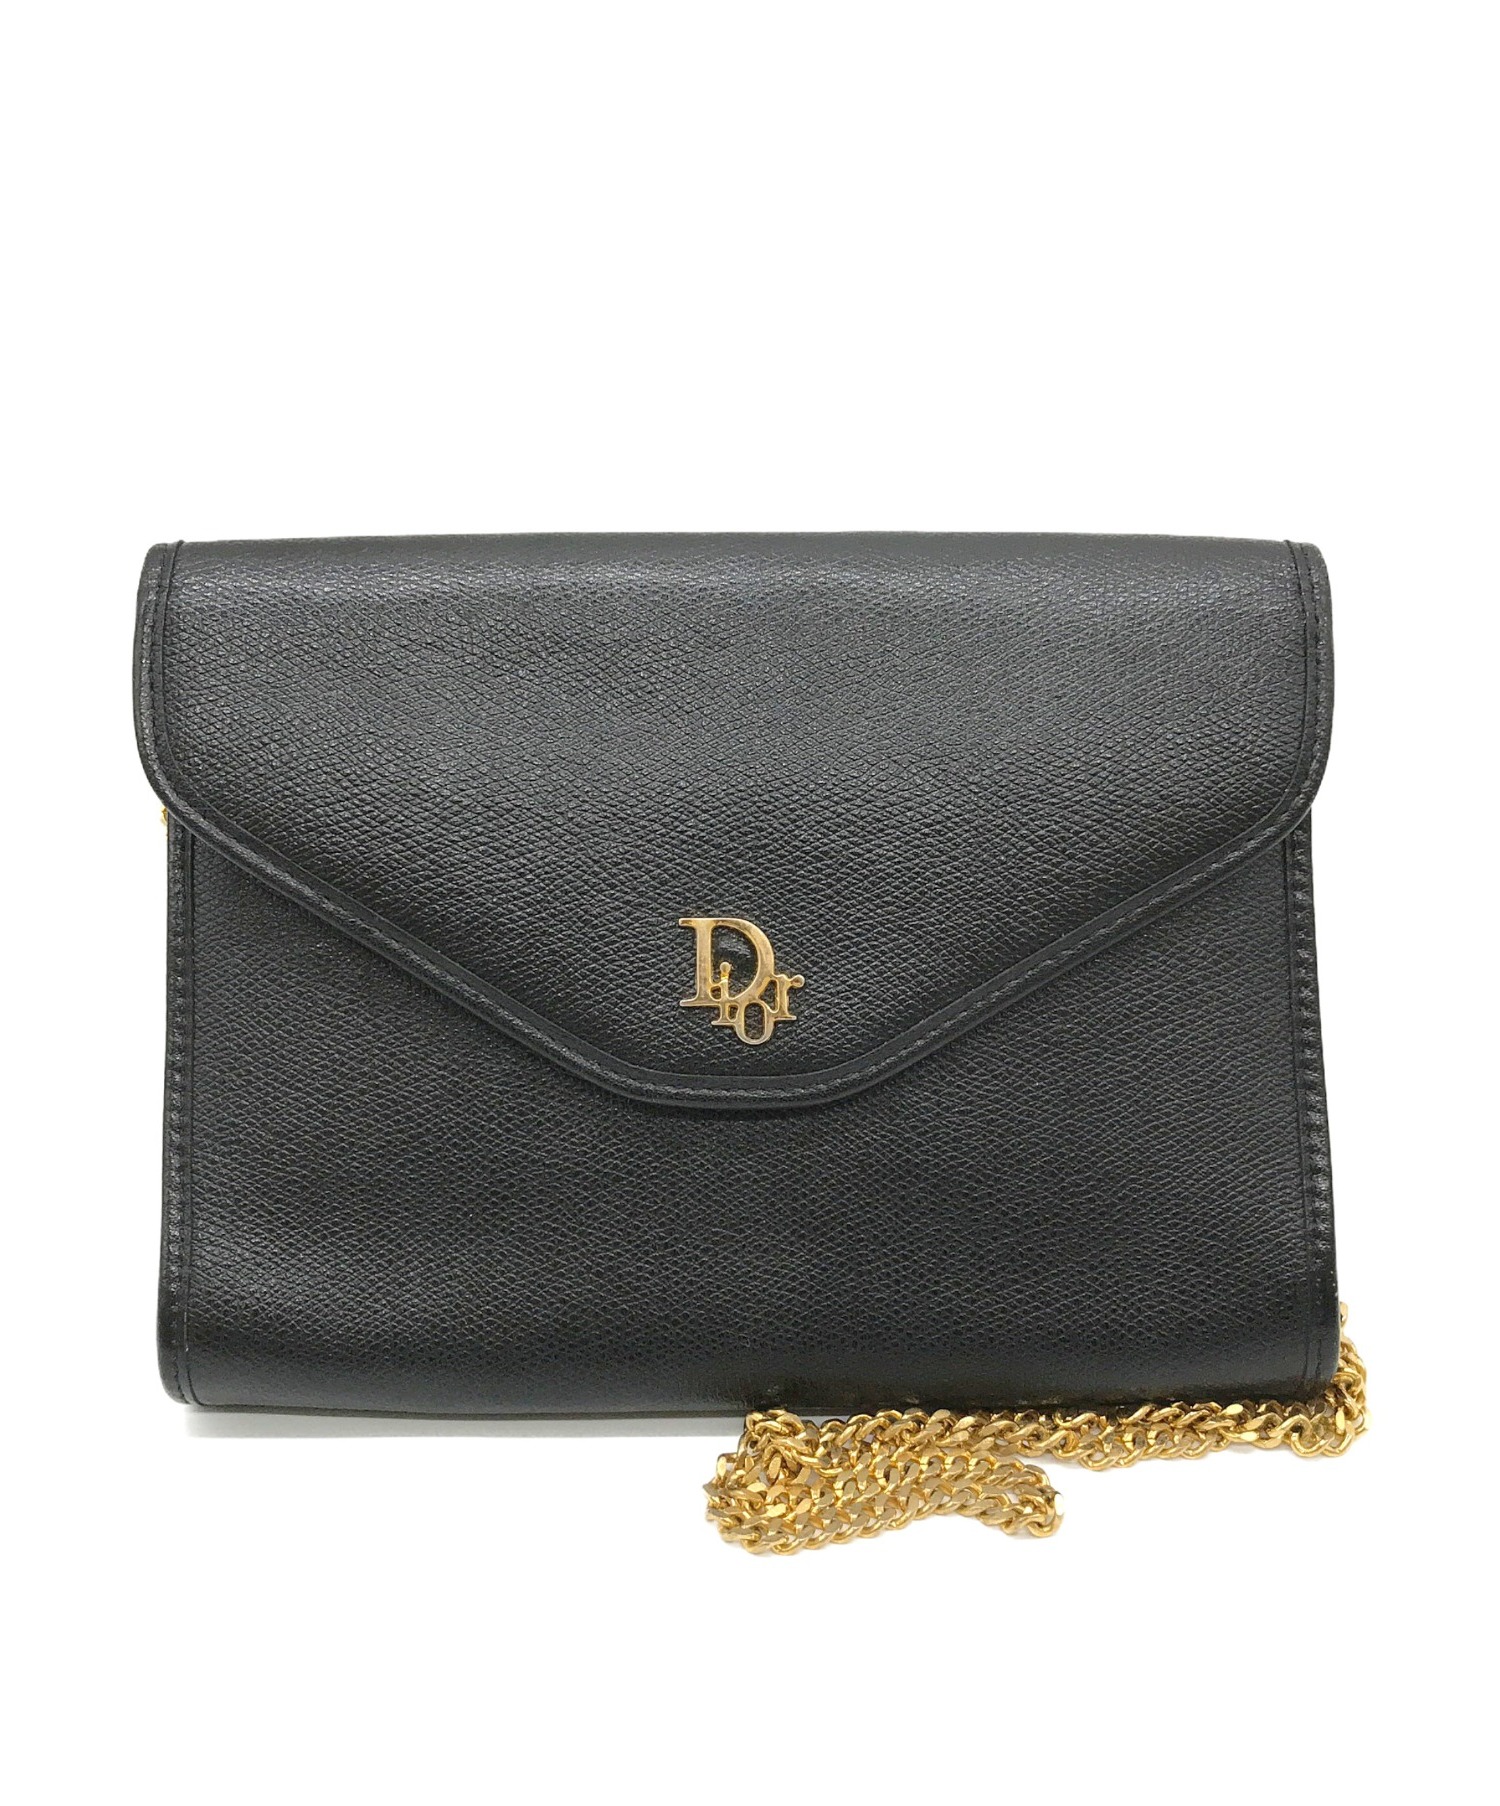 Christian Dior ディオール ディオラマ ショルダーバッグ 長財布